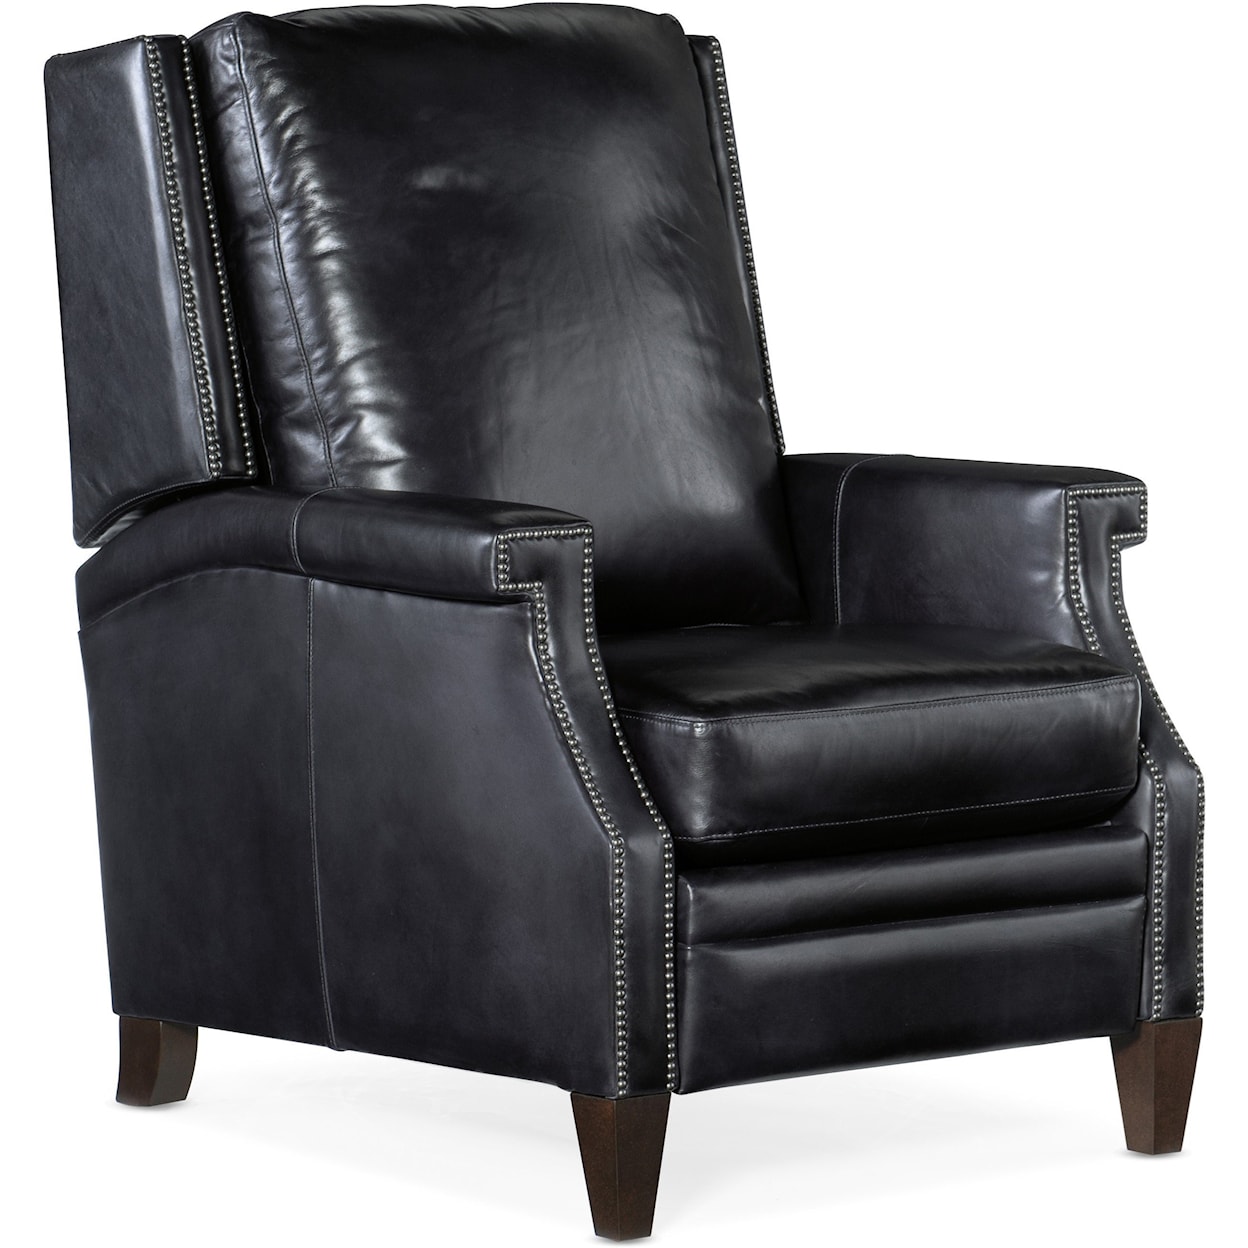 Hooker Furniture Collin Push Back Leather Recliner